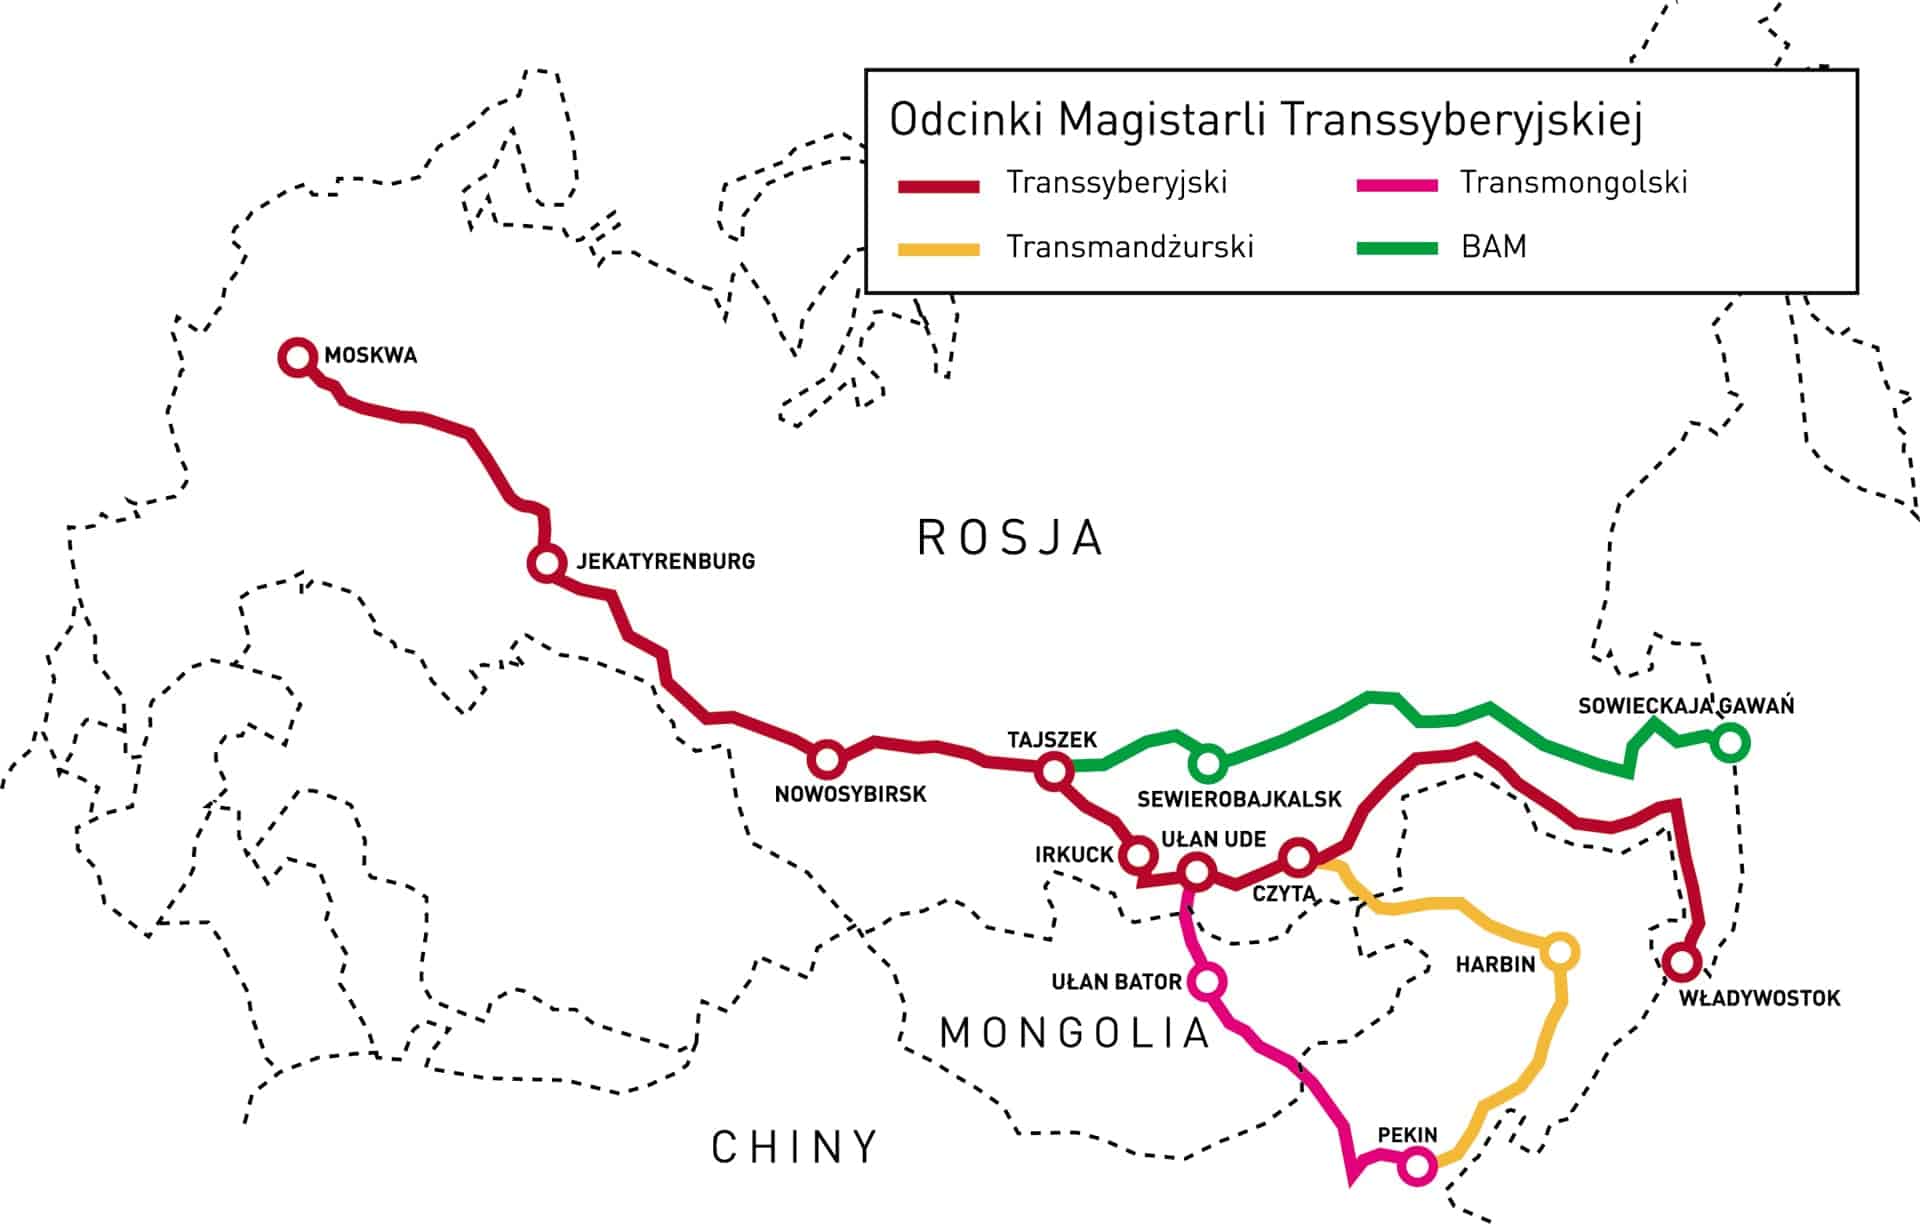 mapa-magistrali-transsyberyjskiej-transsyberysjka-pl